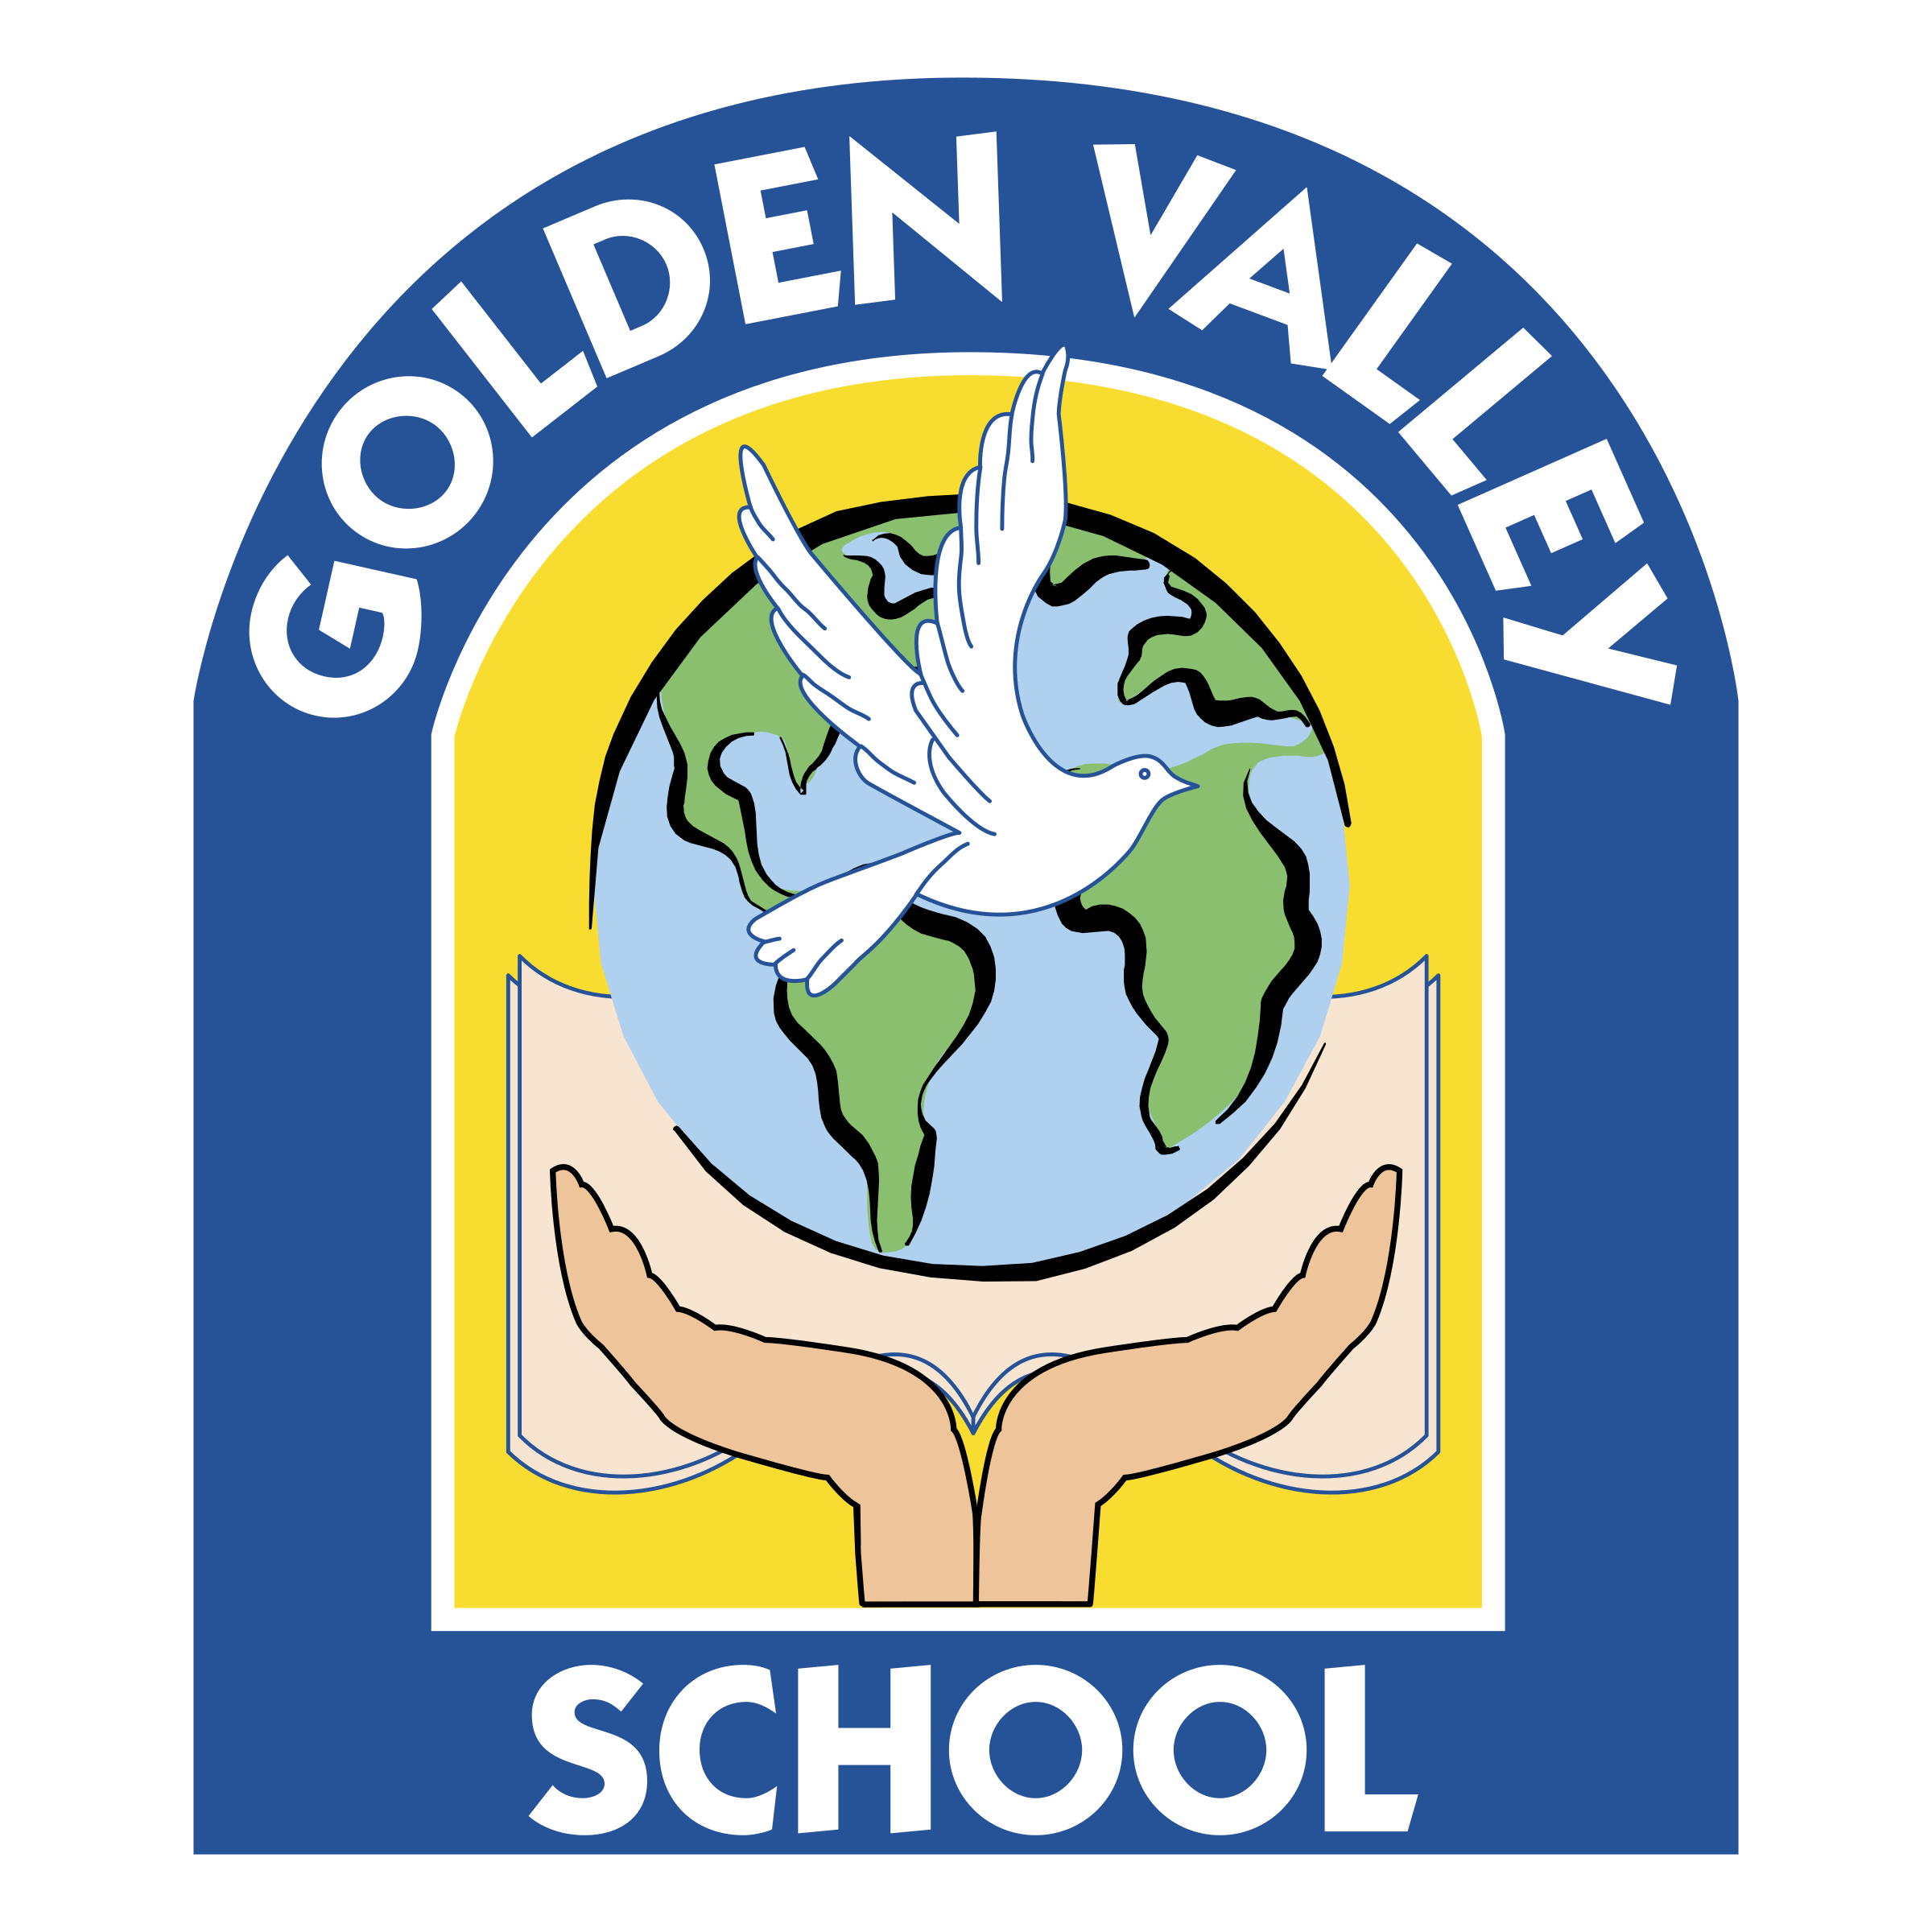 Golden School Logo - Golden Valley School Logo PNG Transparent & SVG Vector